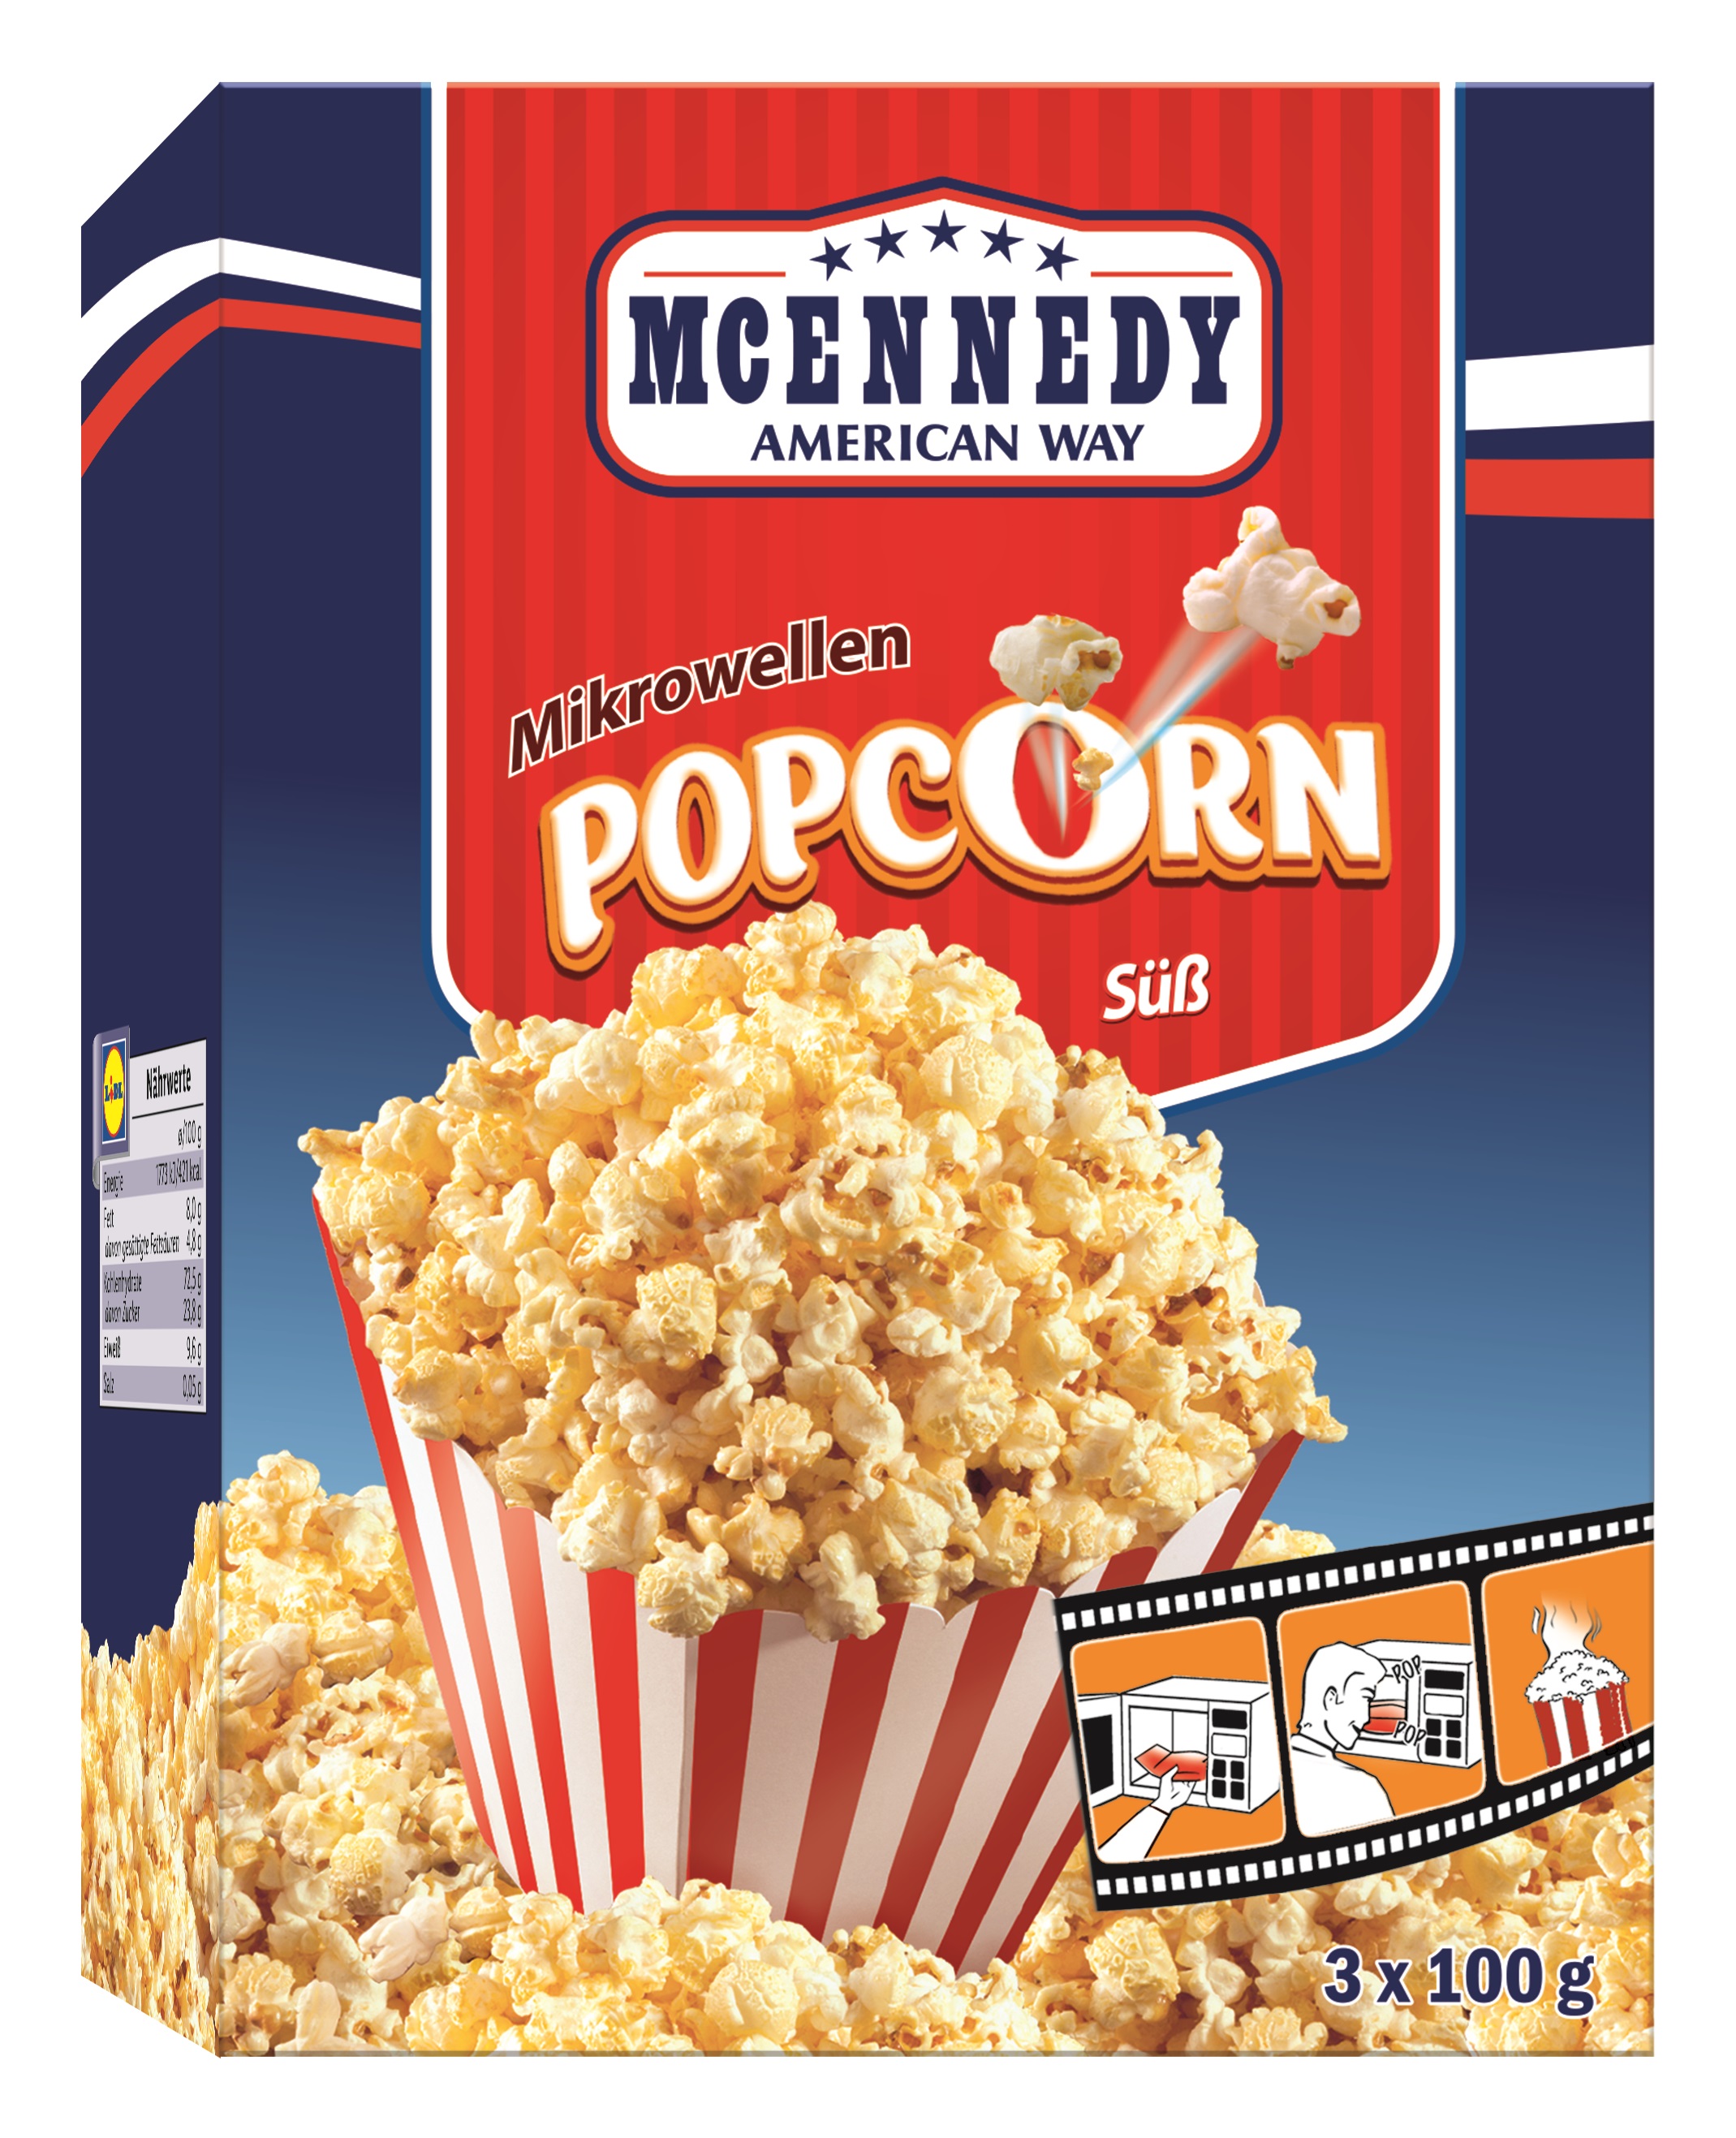 Rückruf: Lidl ruft Popcorn wegen Pestizid zurück